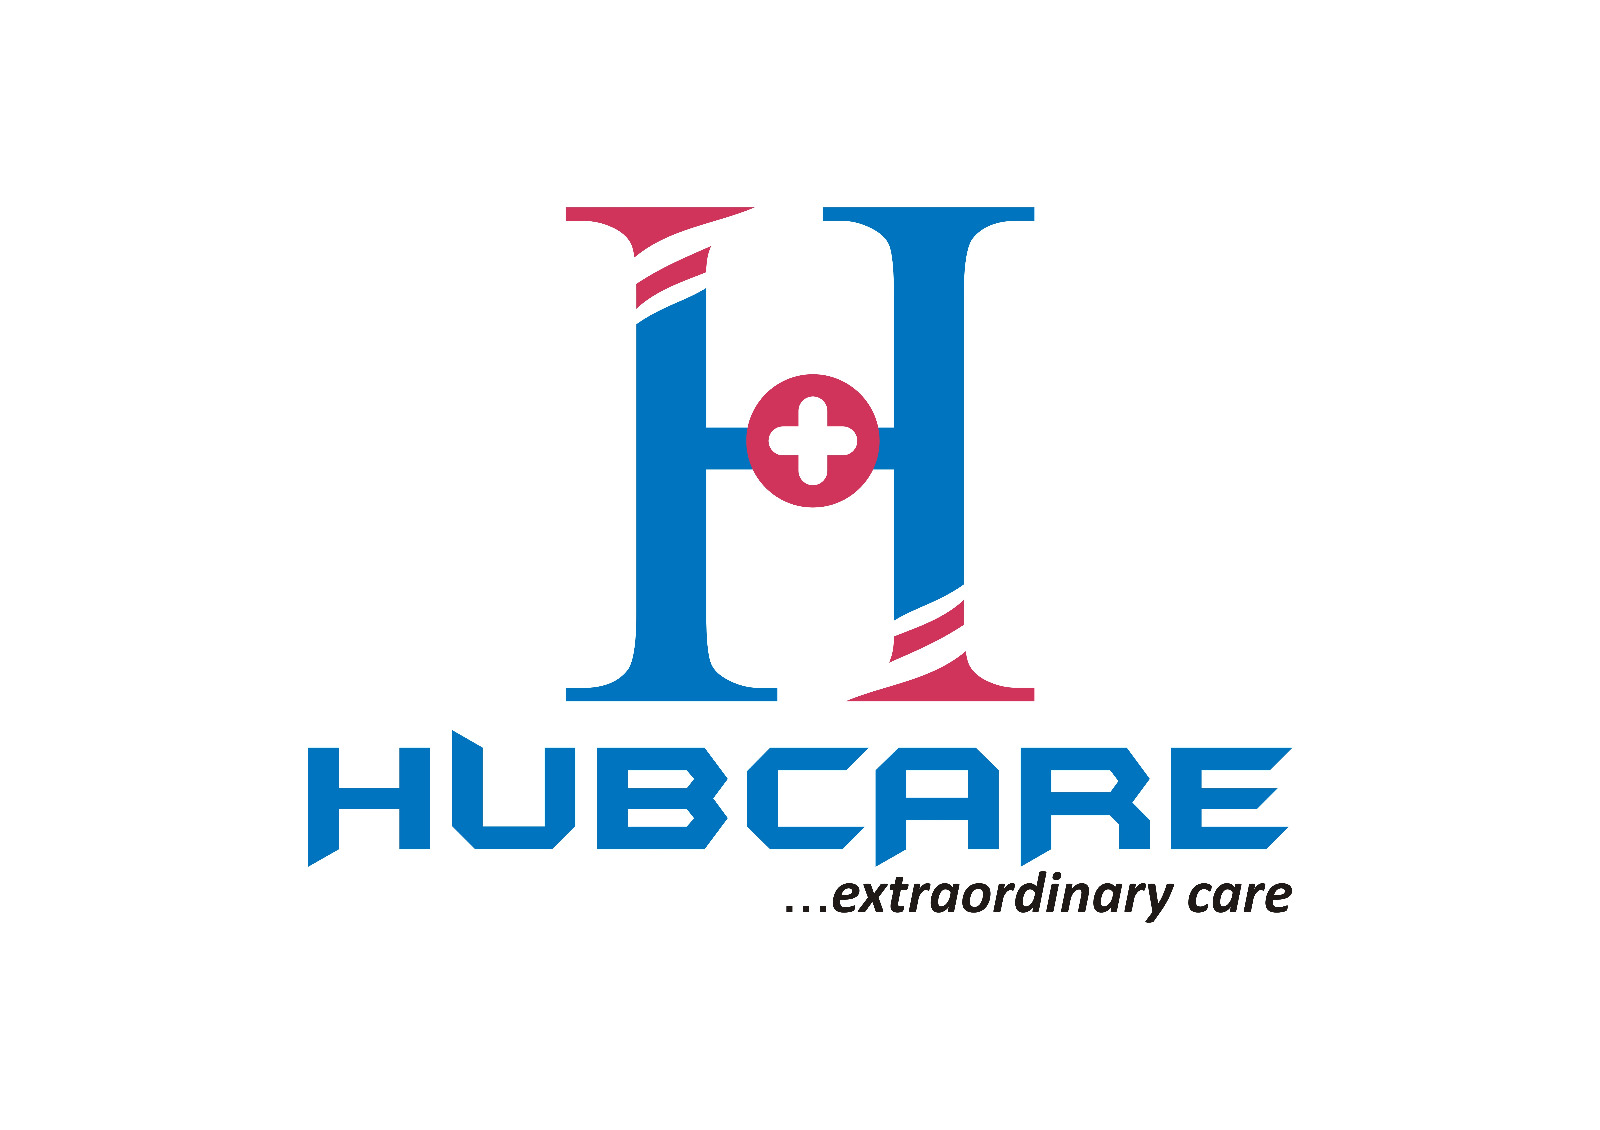 HubCare logo (extraordinary care)